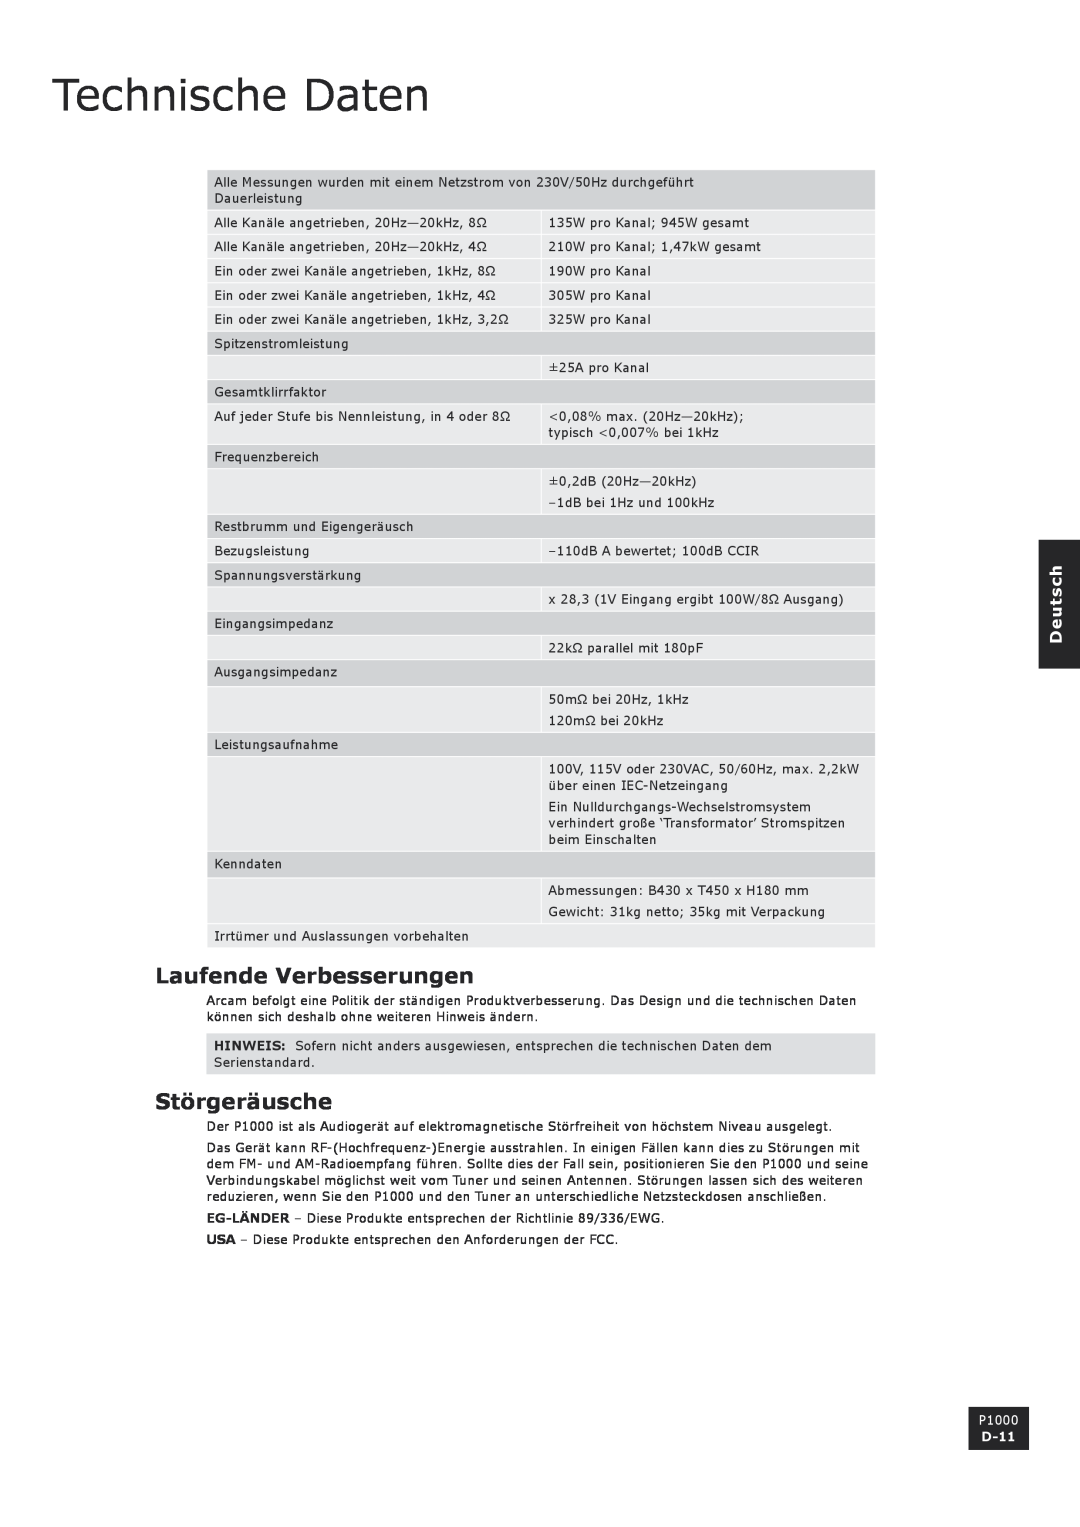 Arcam P1000 manual Technische Daten, Laufende Verbesserungen, Störgeräusche, D-11, Deutsch 